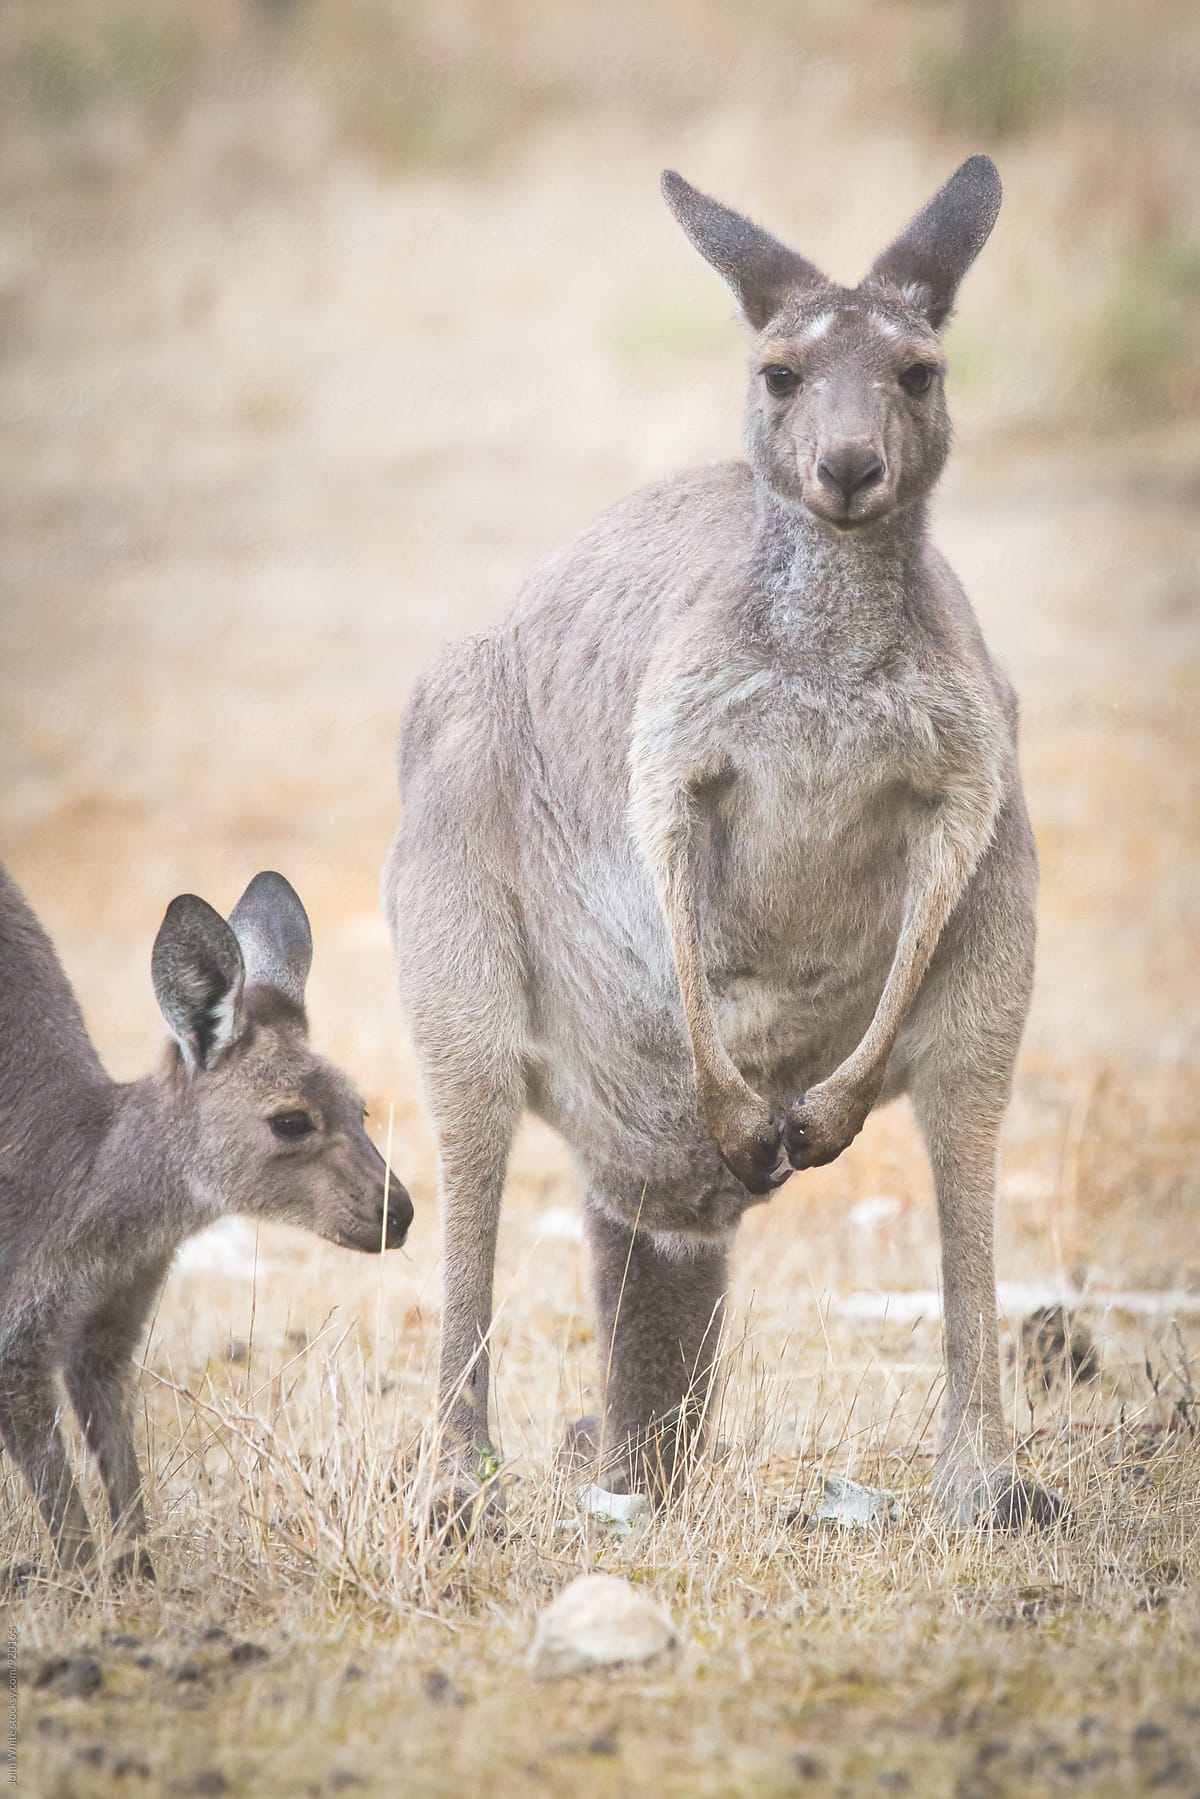 Kangaroo and baby.